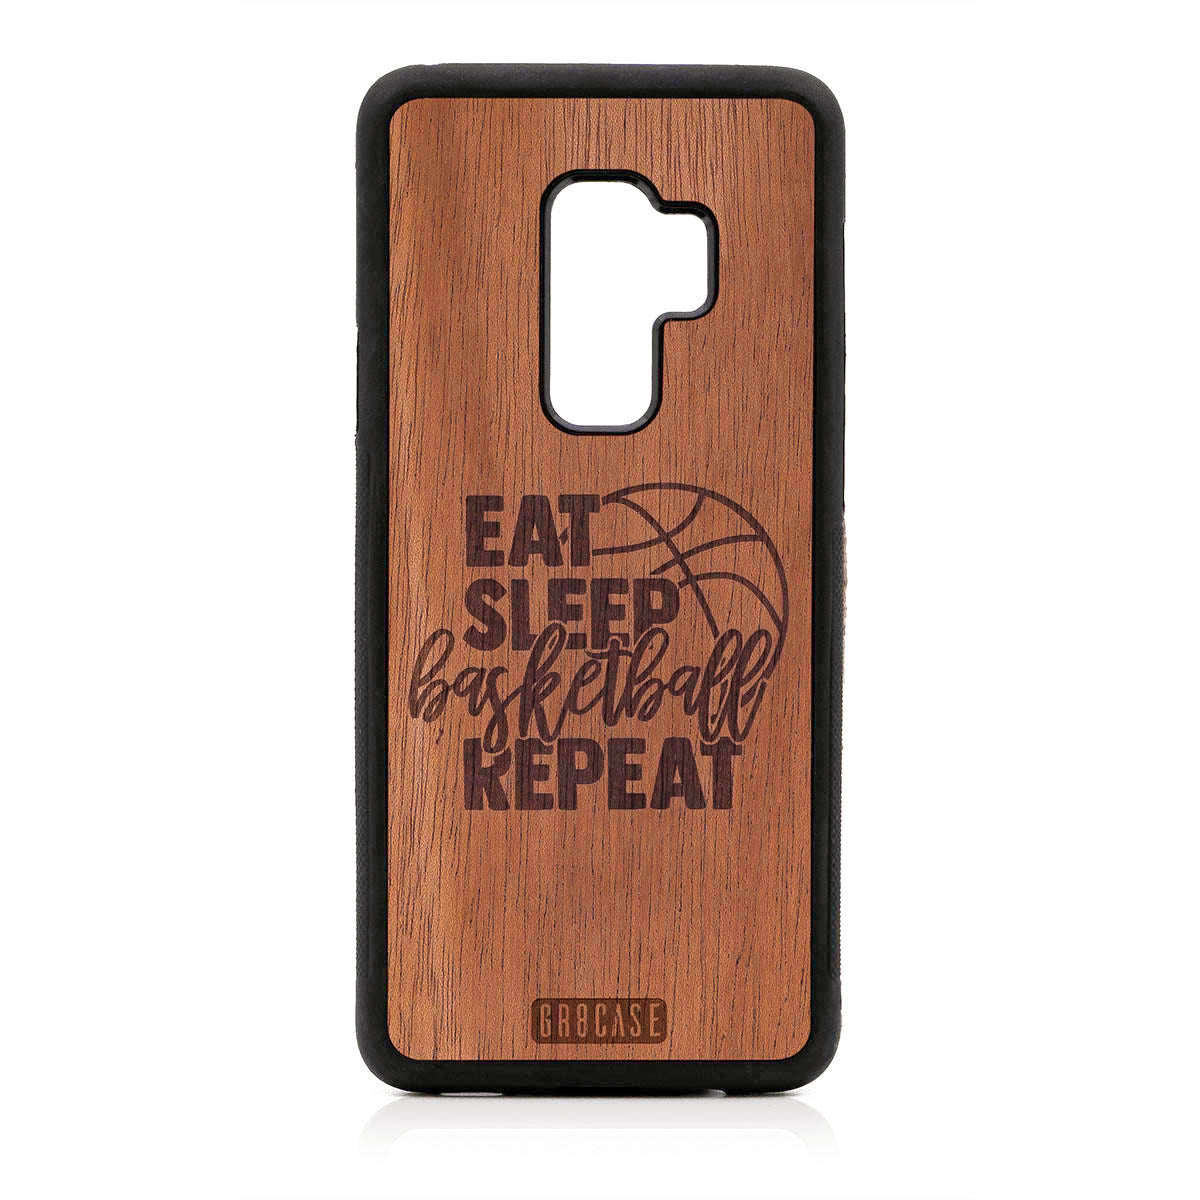 Eat Sleep Basketball Repeat Design Wood Case For Samsung Galaxy S9 Plus